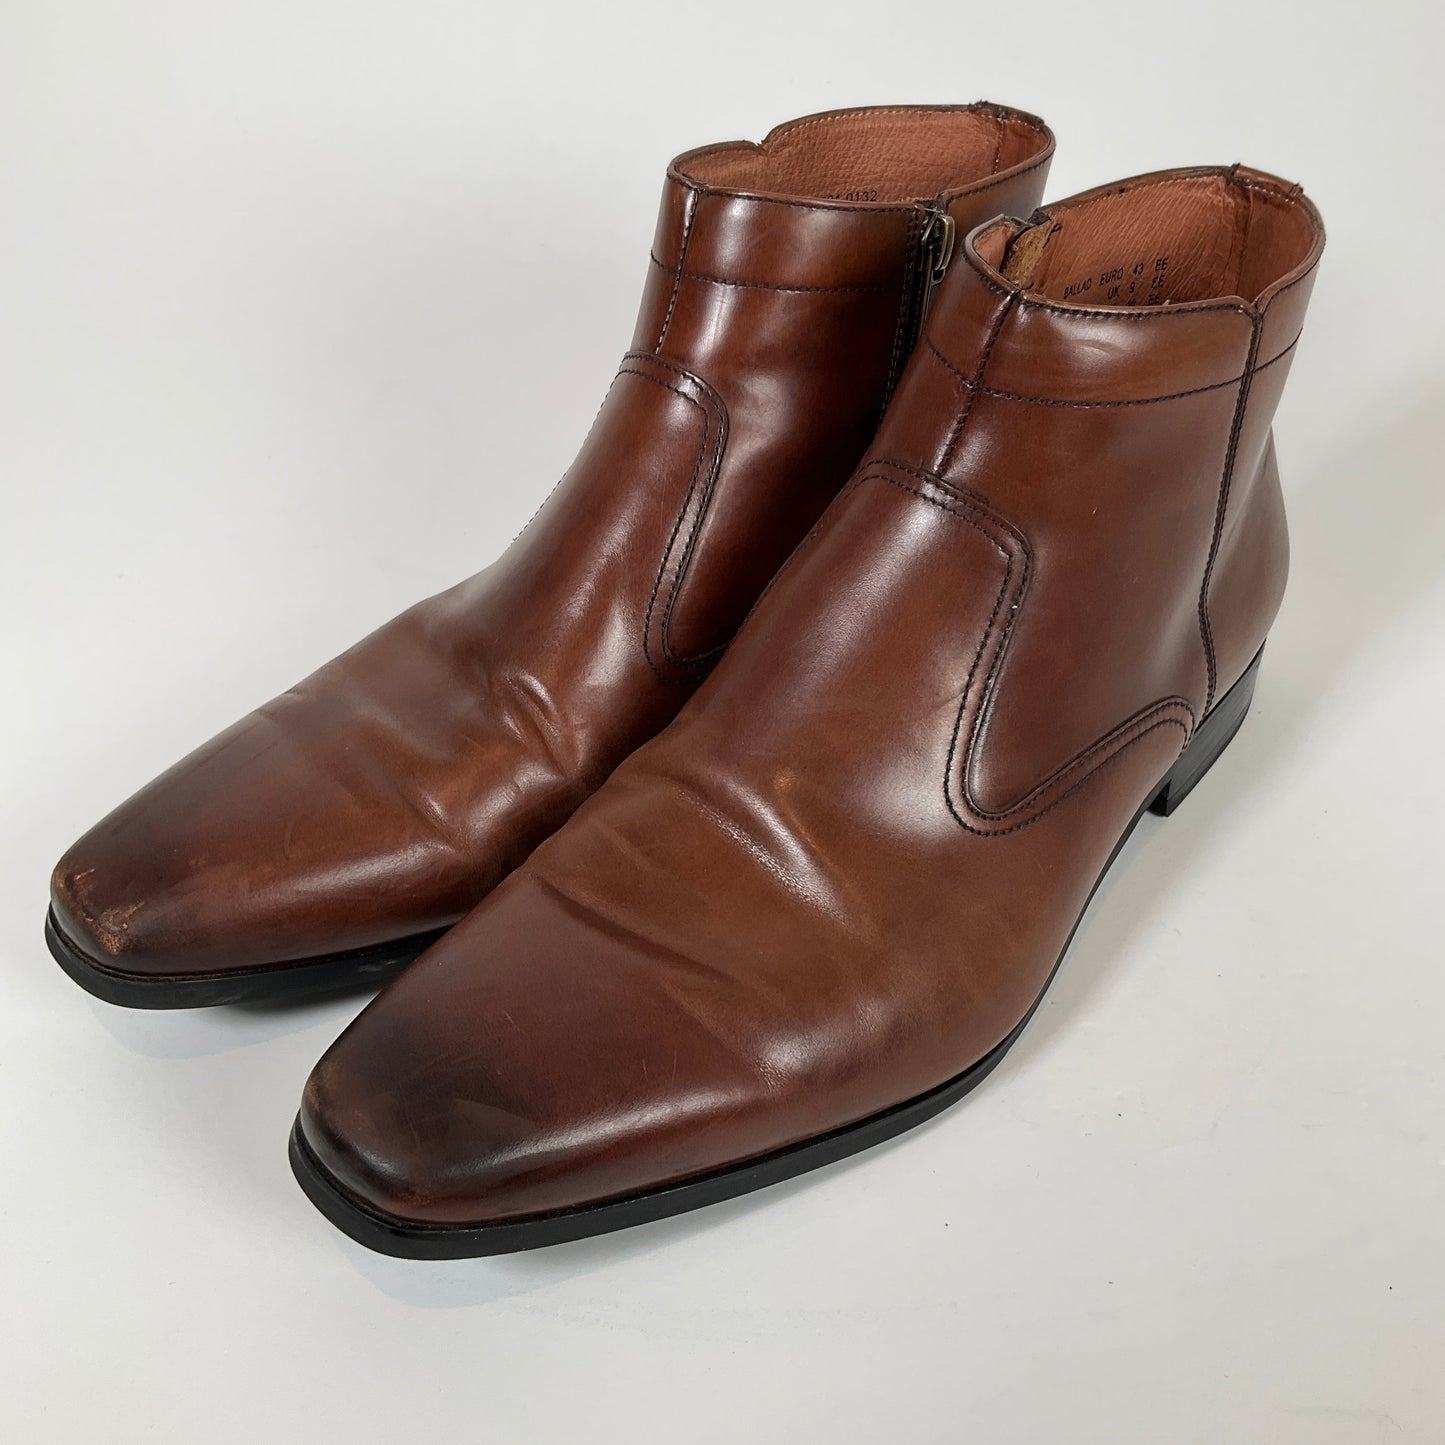 Florsheim - Leather Boots Size 9 Shoes